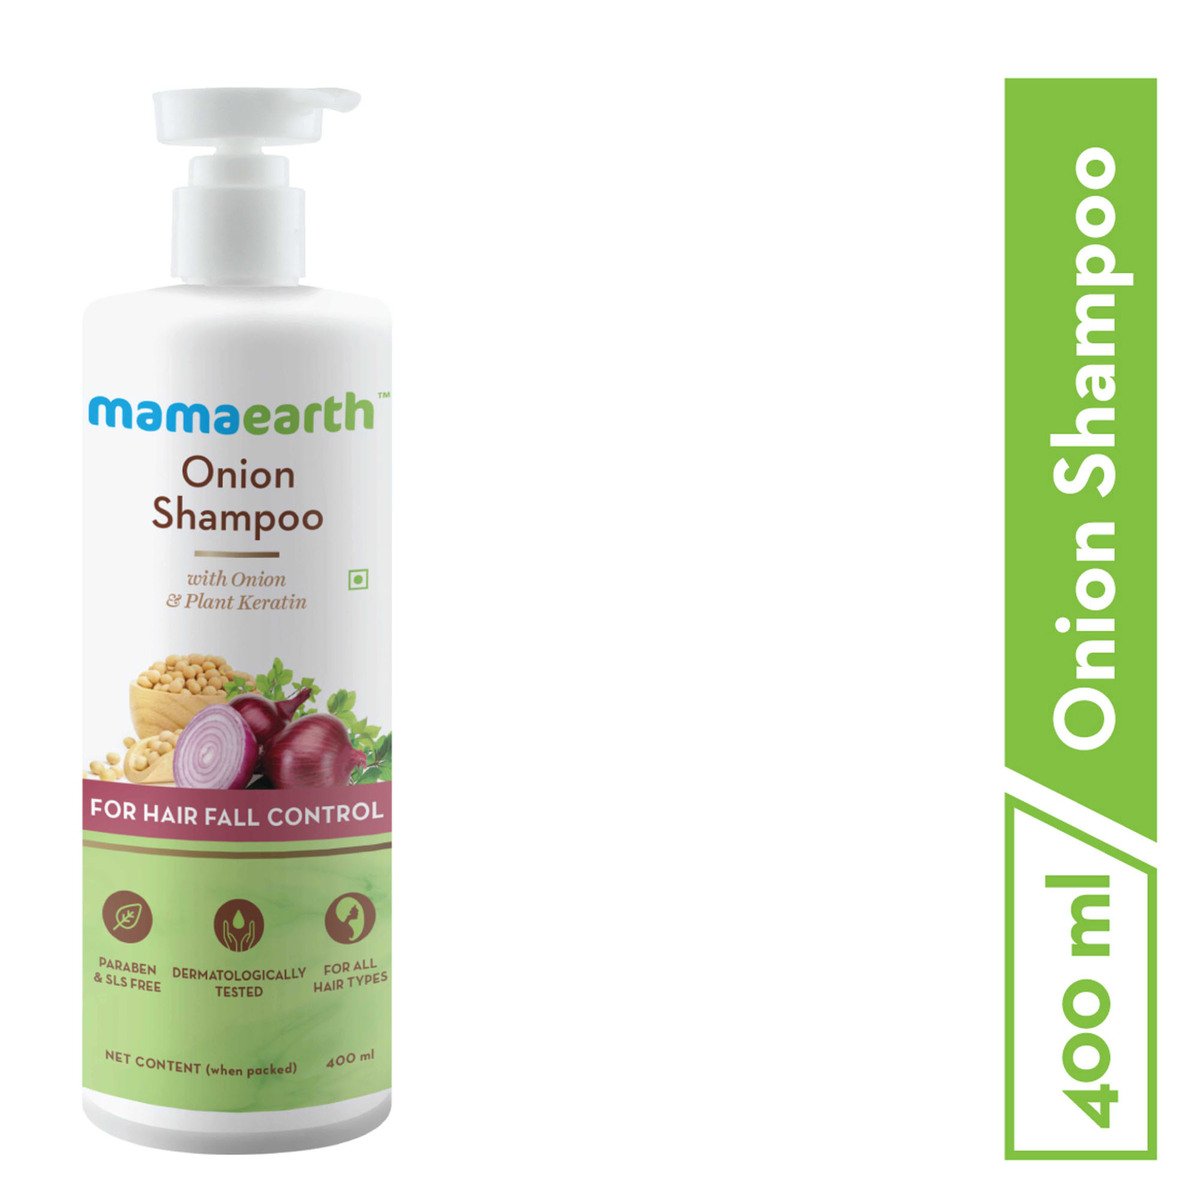 Mamaearth Onion Shampoo with Onion Oil and Plant Keratin 400ml